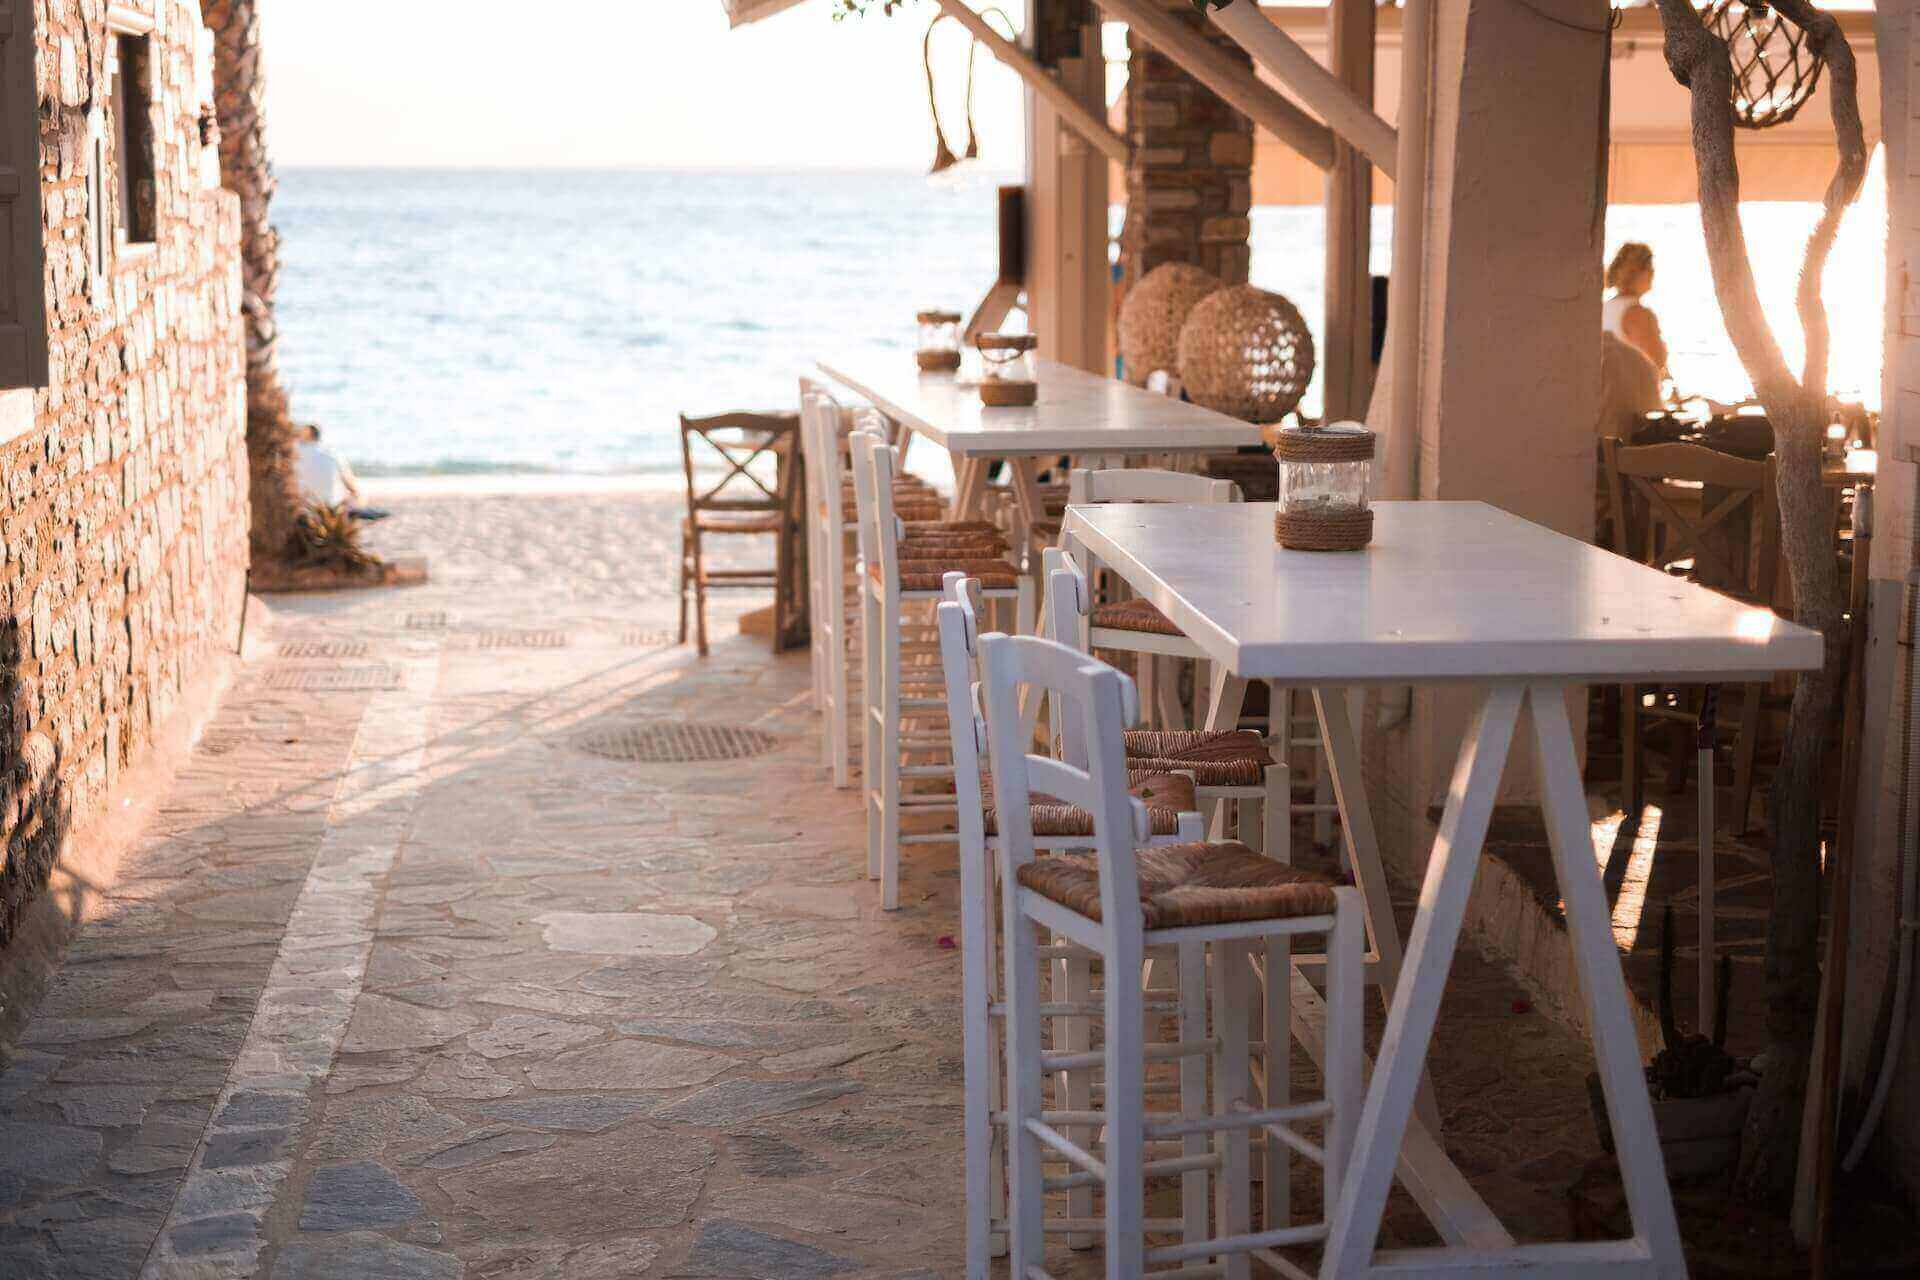 A restaurant by the beach